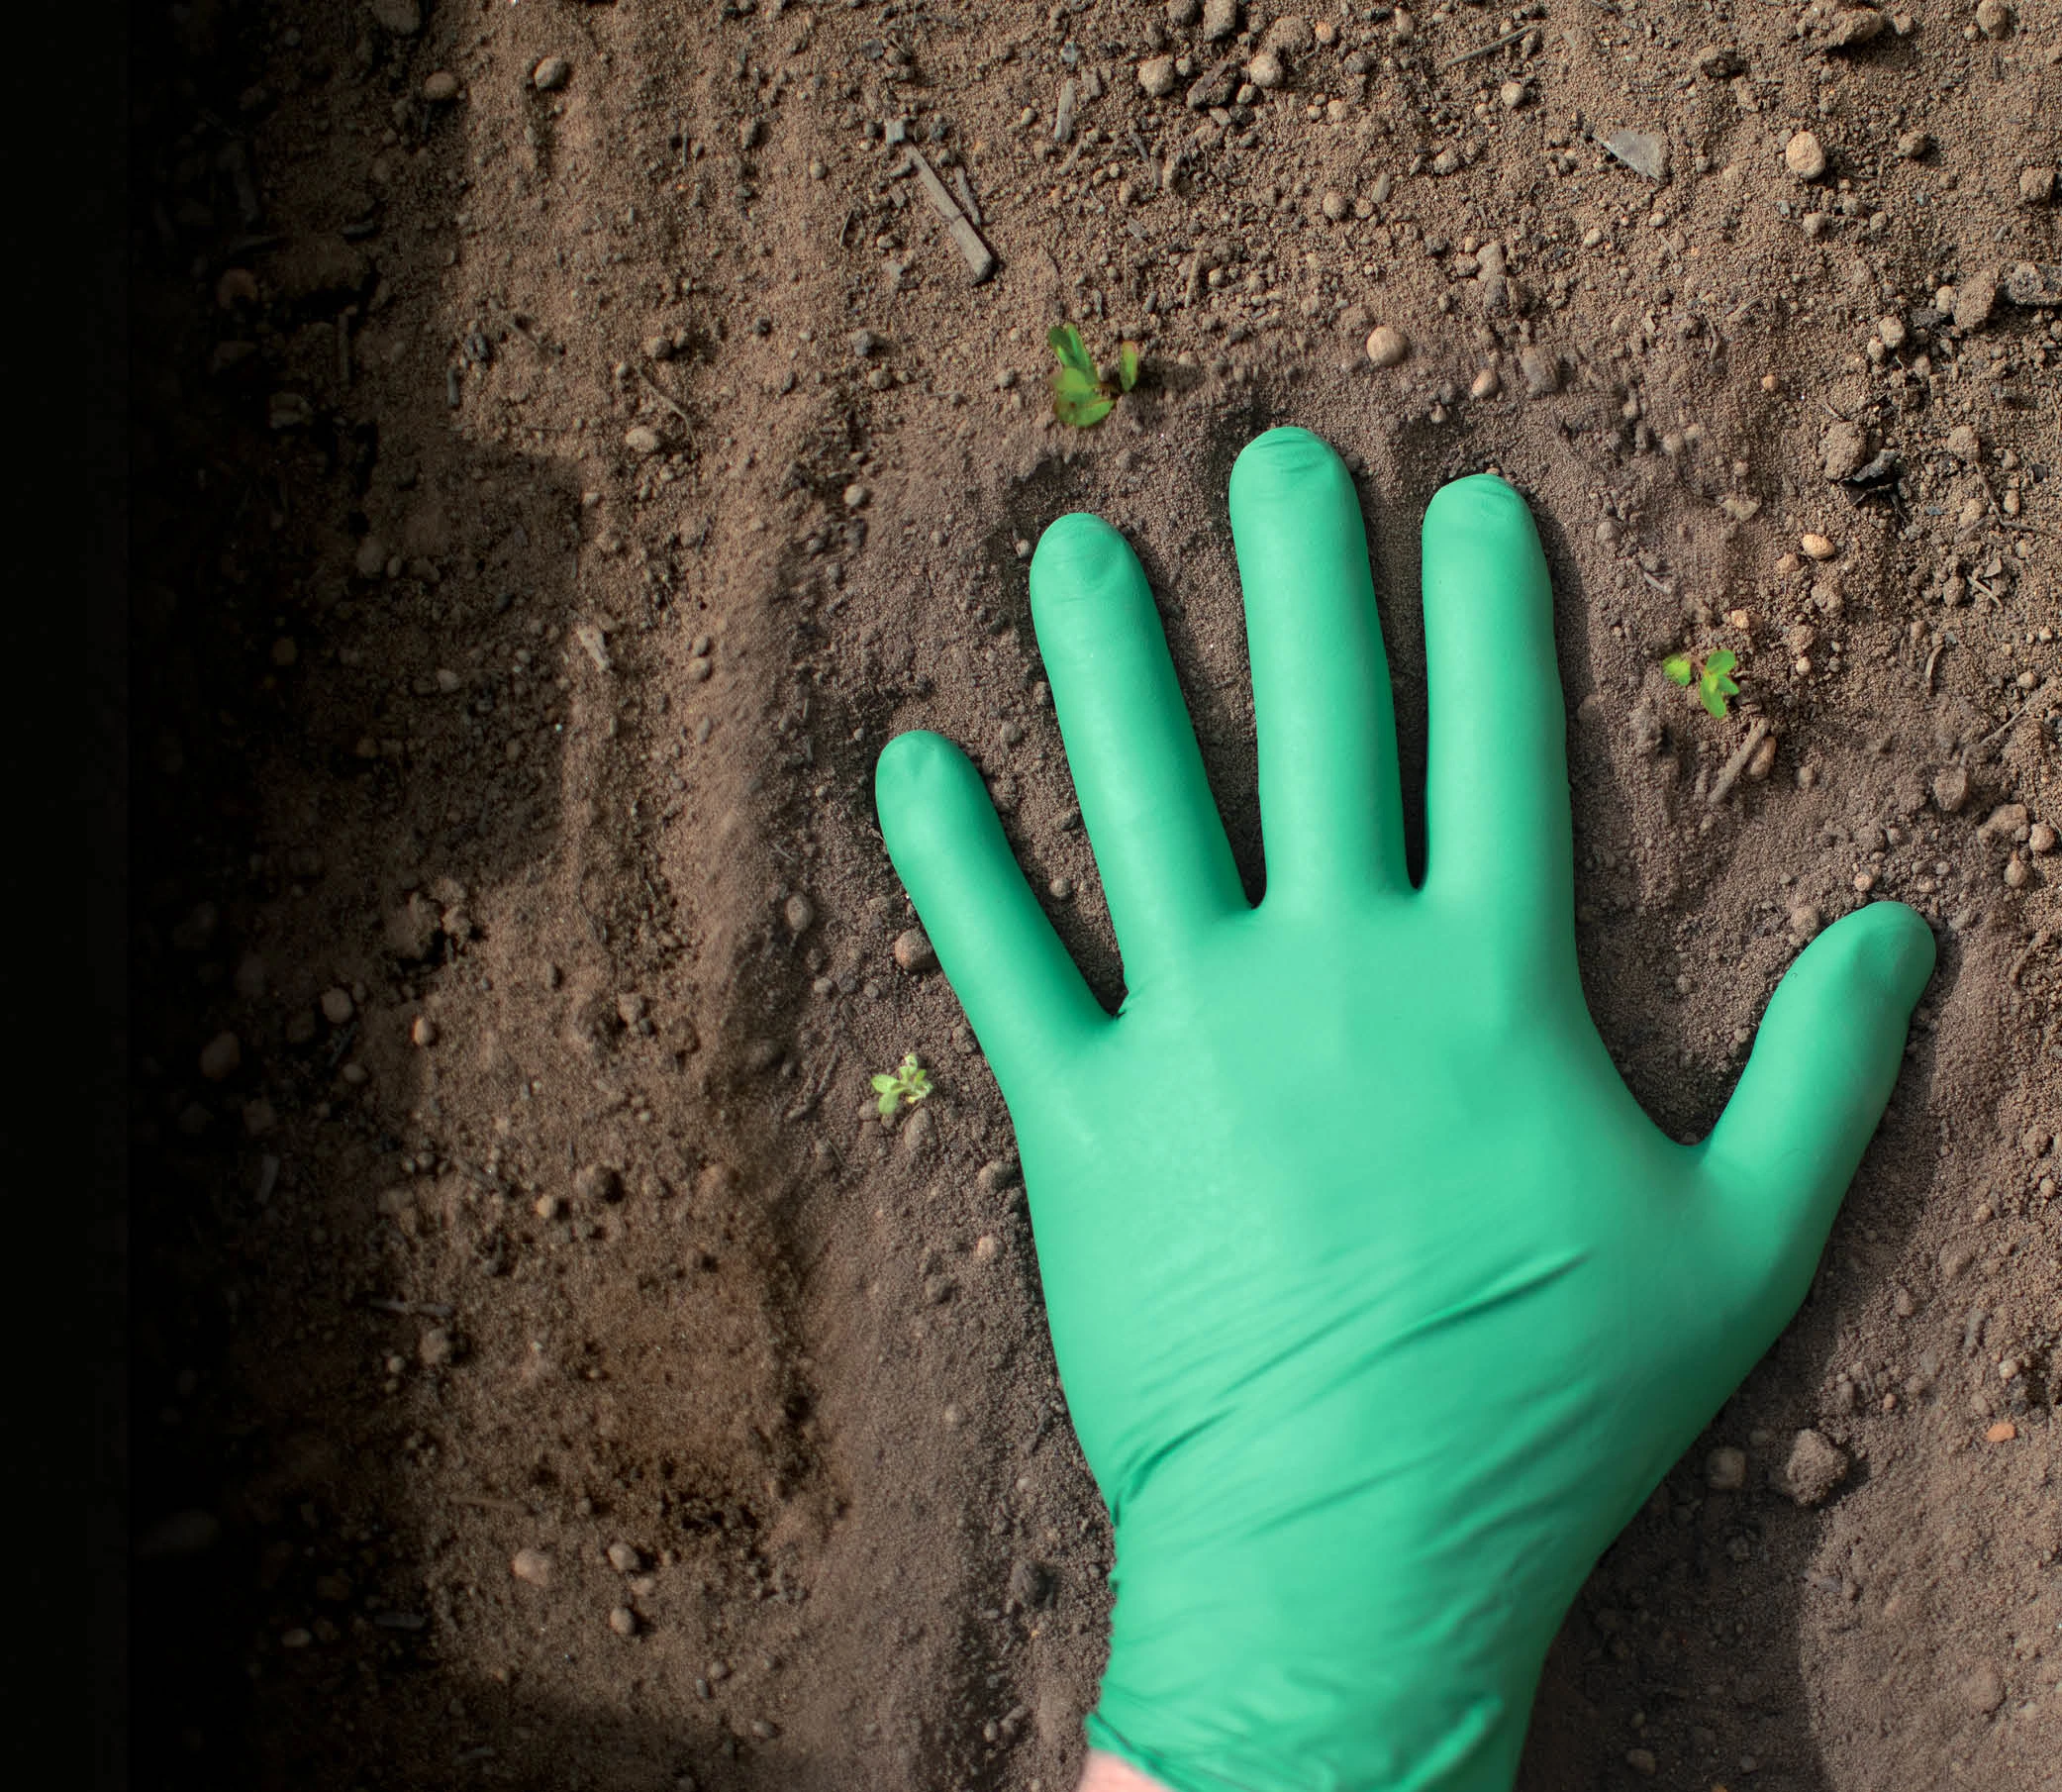 Green Nitrile glove Impressing into soil